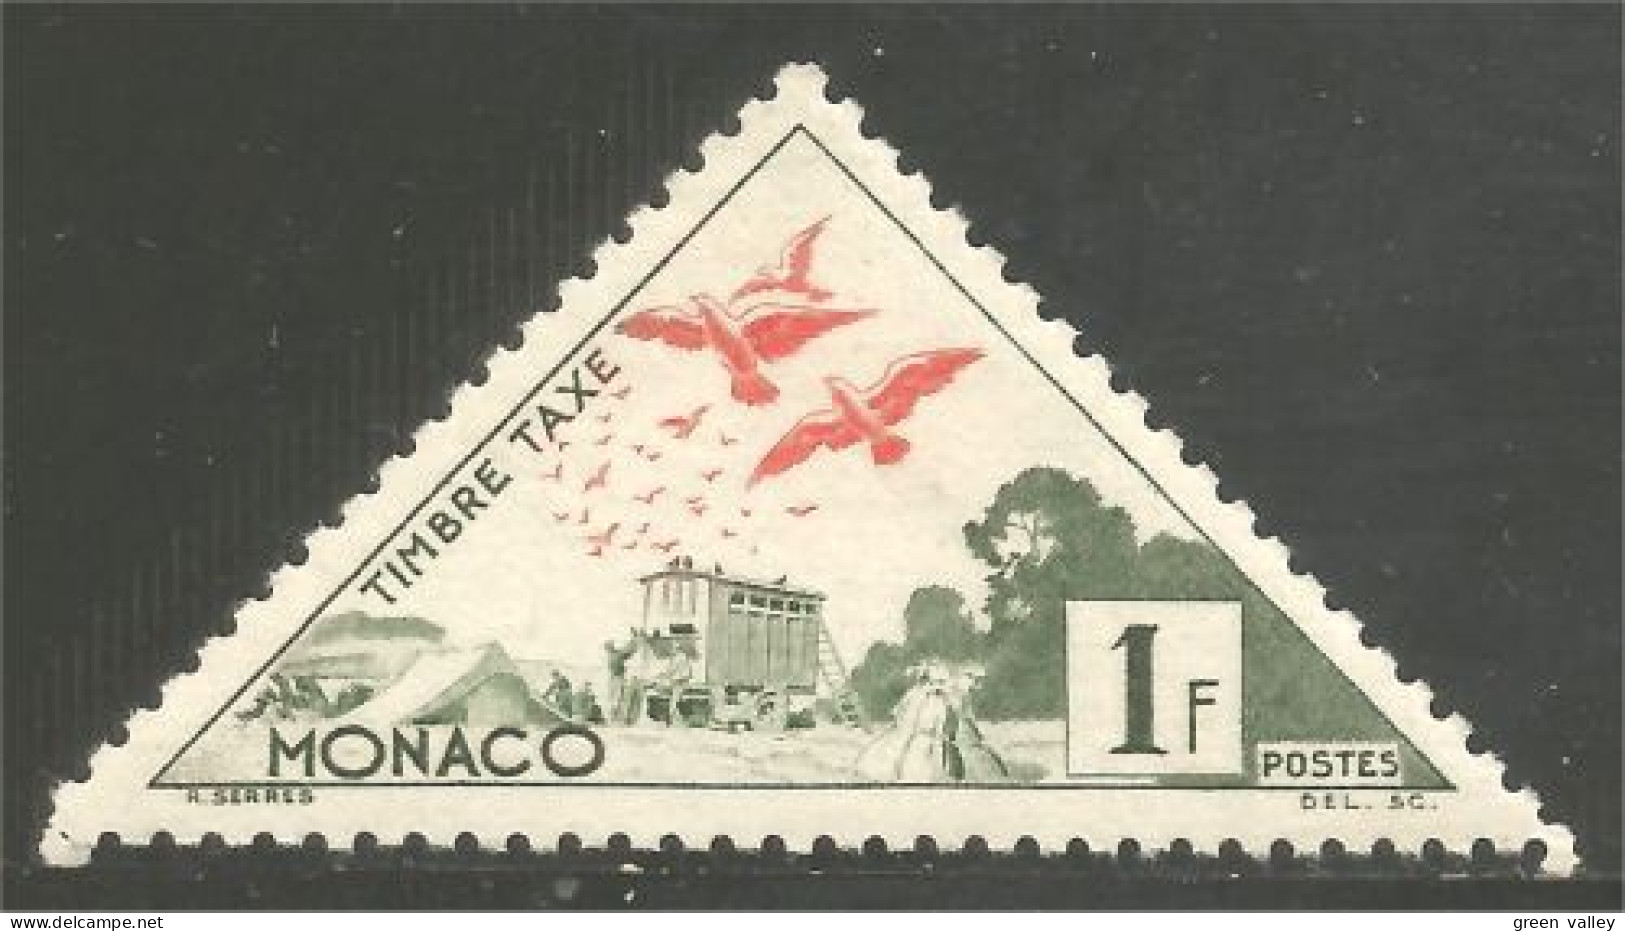 630 Monaco Taxe 1953 Carrier Pigeons Voyageurs Brieftauben Piccioni Tauben MH * Neuf (MON-441) - Piccioni & Colombe